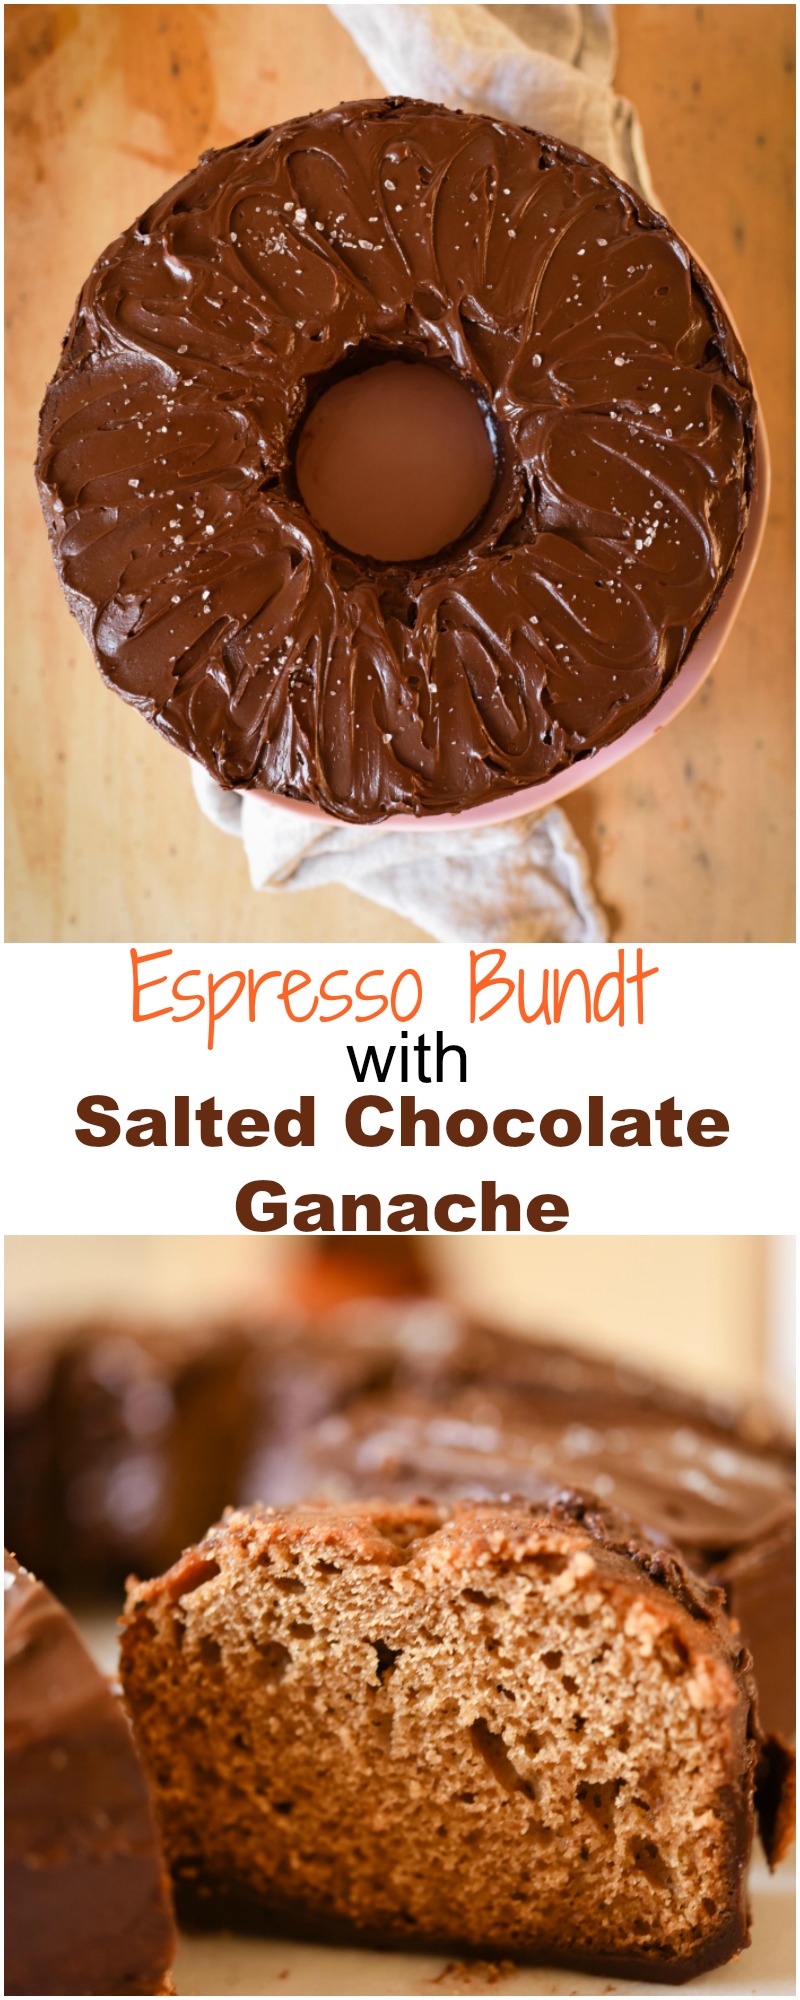 Espresso Bundt with Salted Chocolate Ganache | Patisserie Makes Perfect